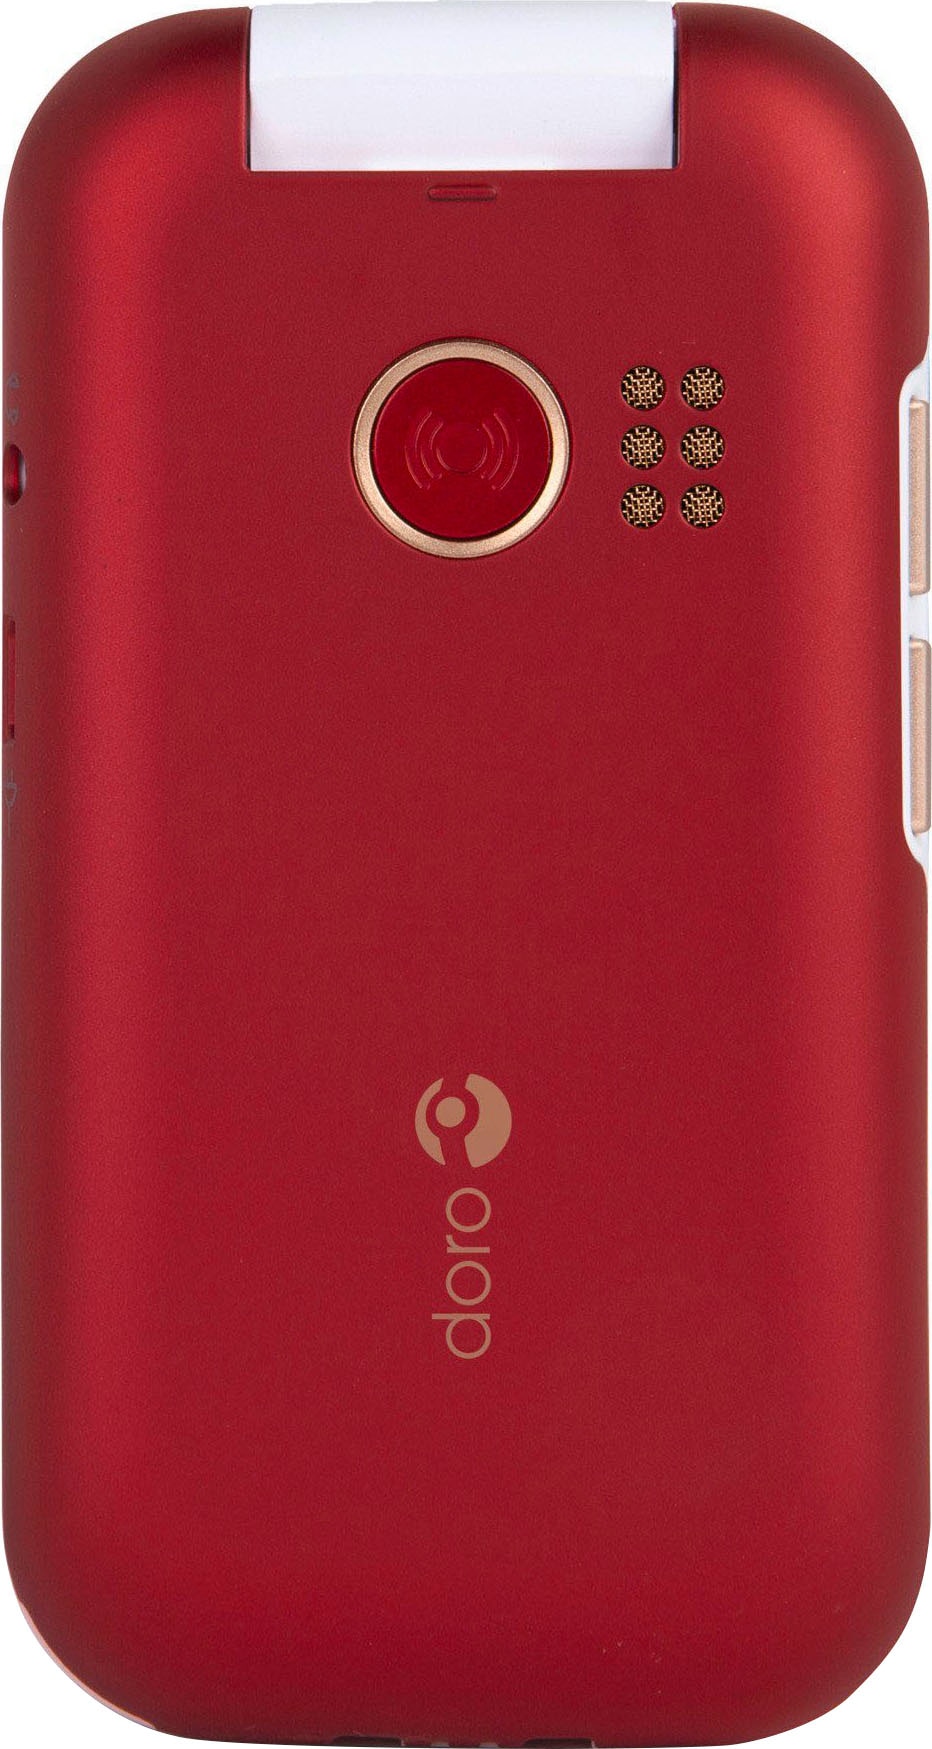 OTTO Handy 3 jetzt cm/2,8 rot, Doro 7,11 Kamera »6060«, bei MP Zoll, kaufen